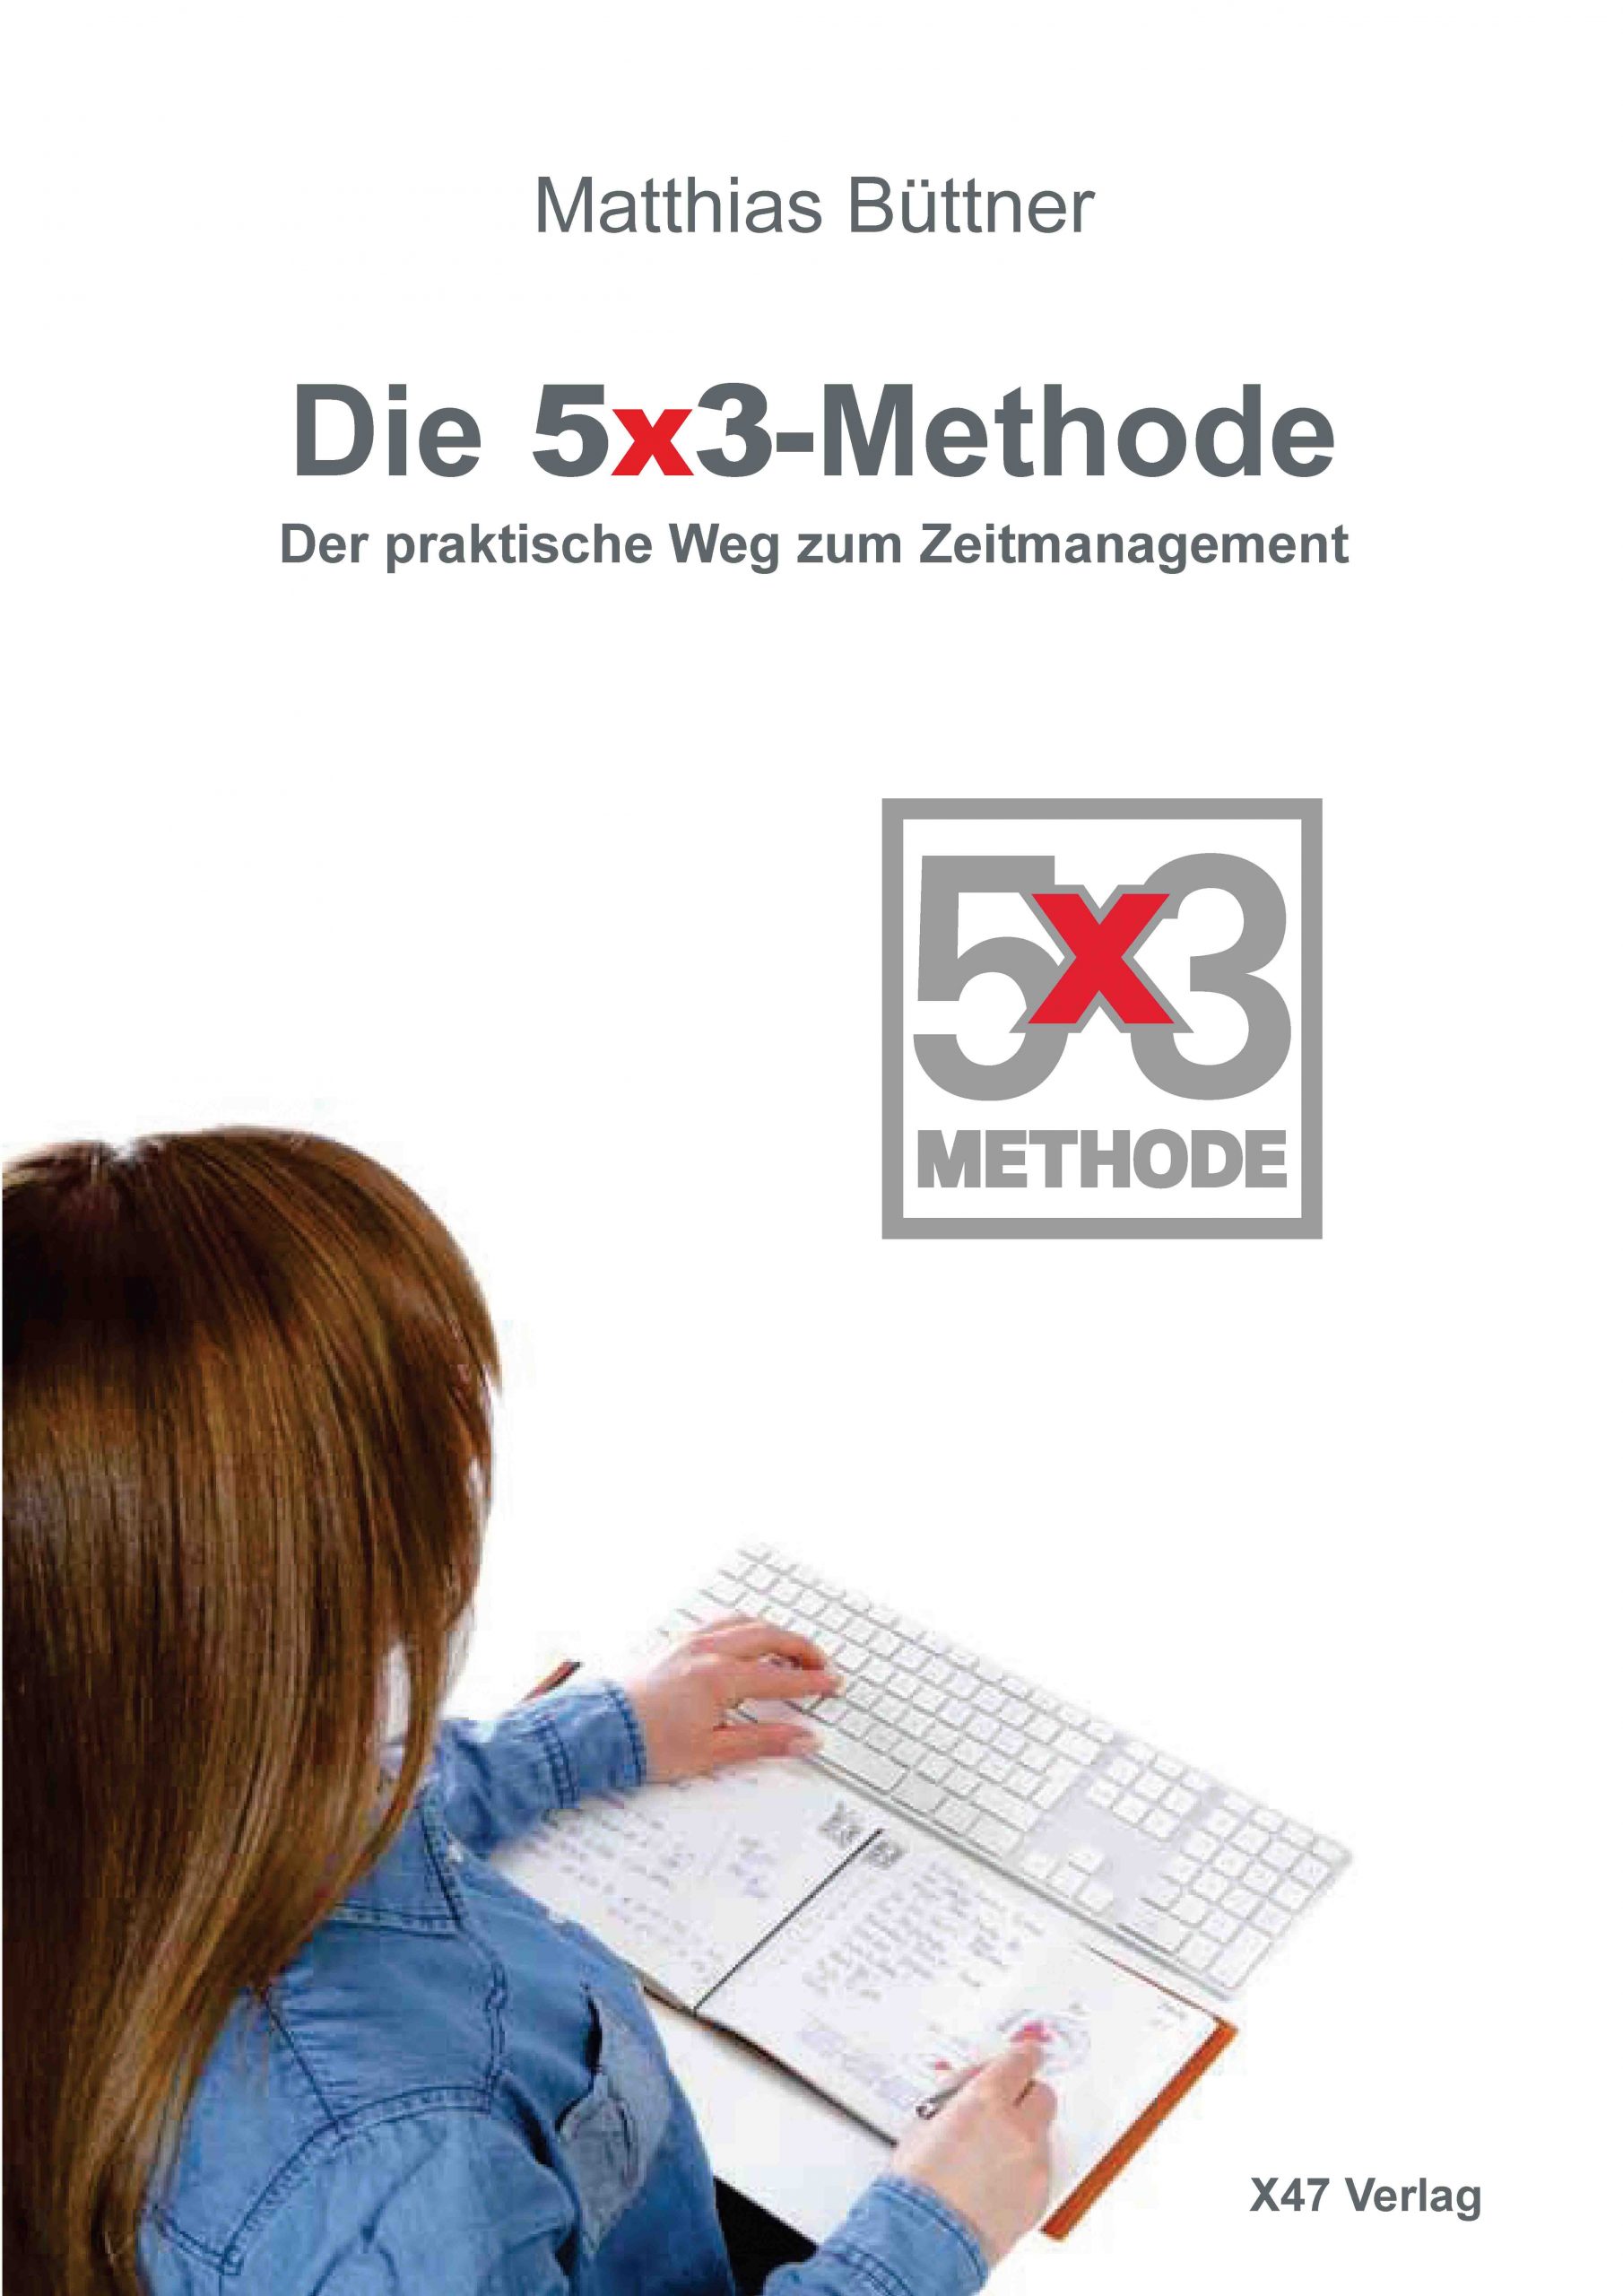 Matthias-Buettner-5x3-Methode-3